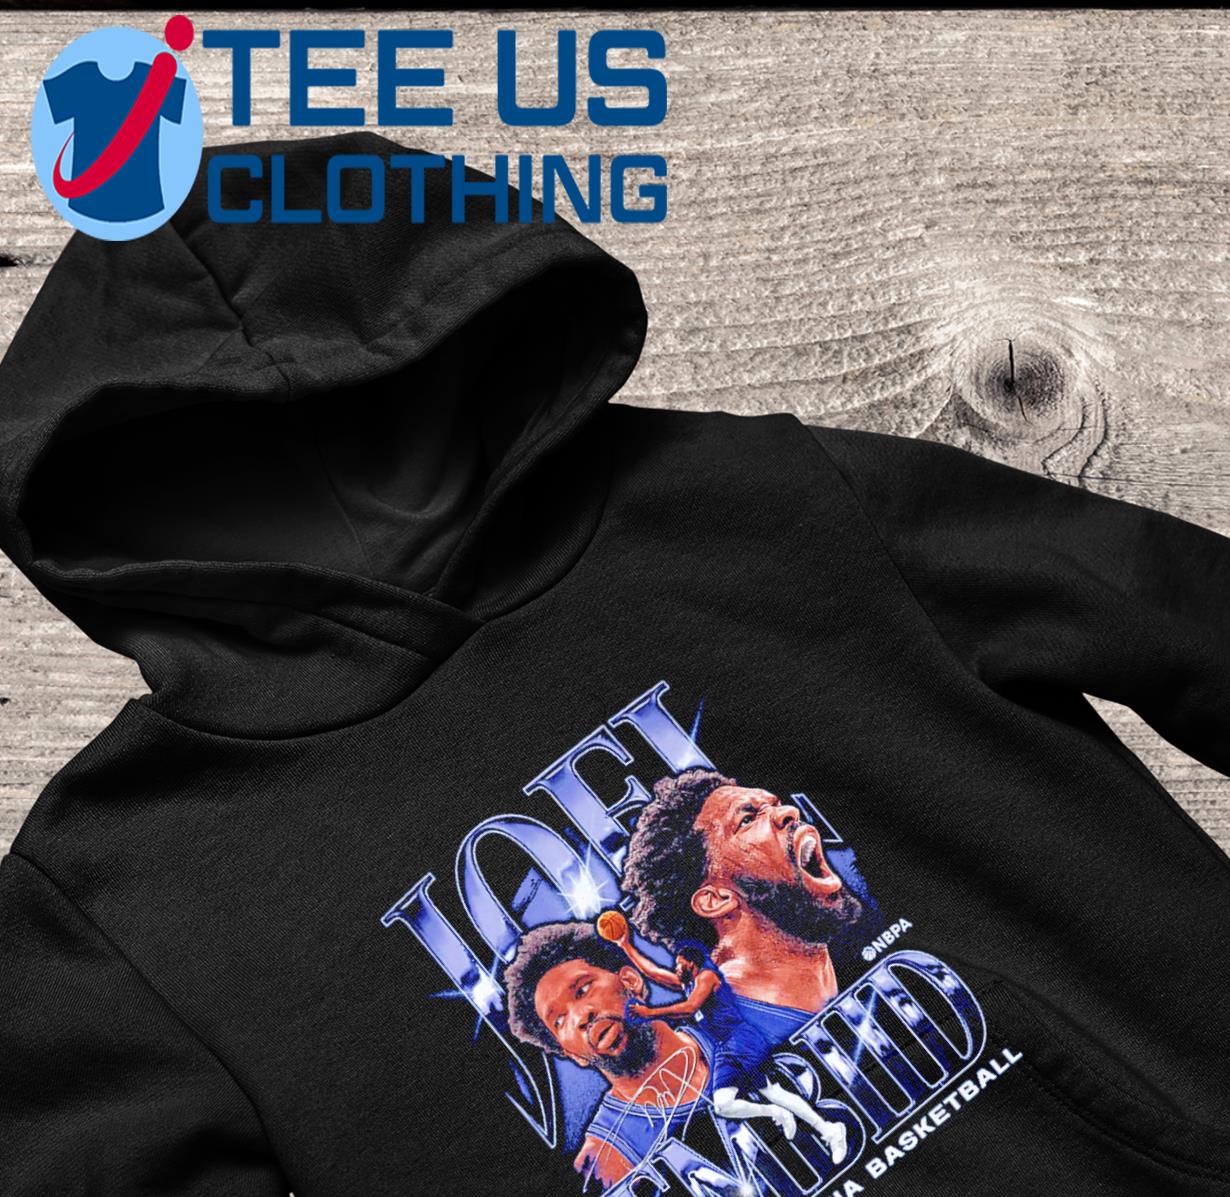 Official Joel embiid philadelphia 76ers basketball vintage T-shirt, hoodie,  tank top, sweater and long sleeve t-shirt